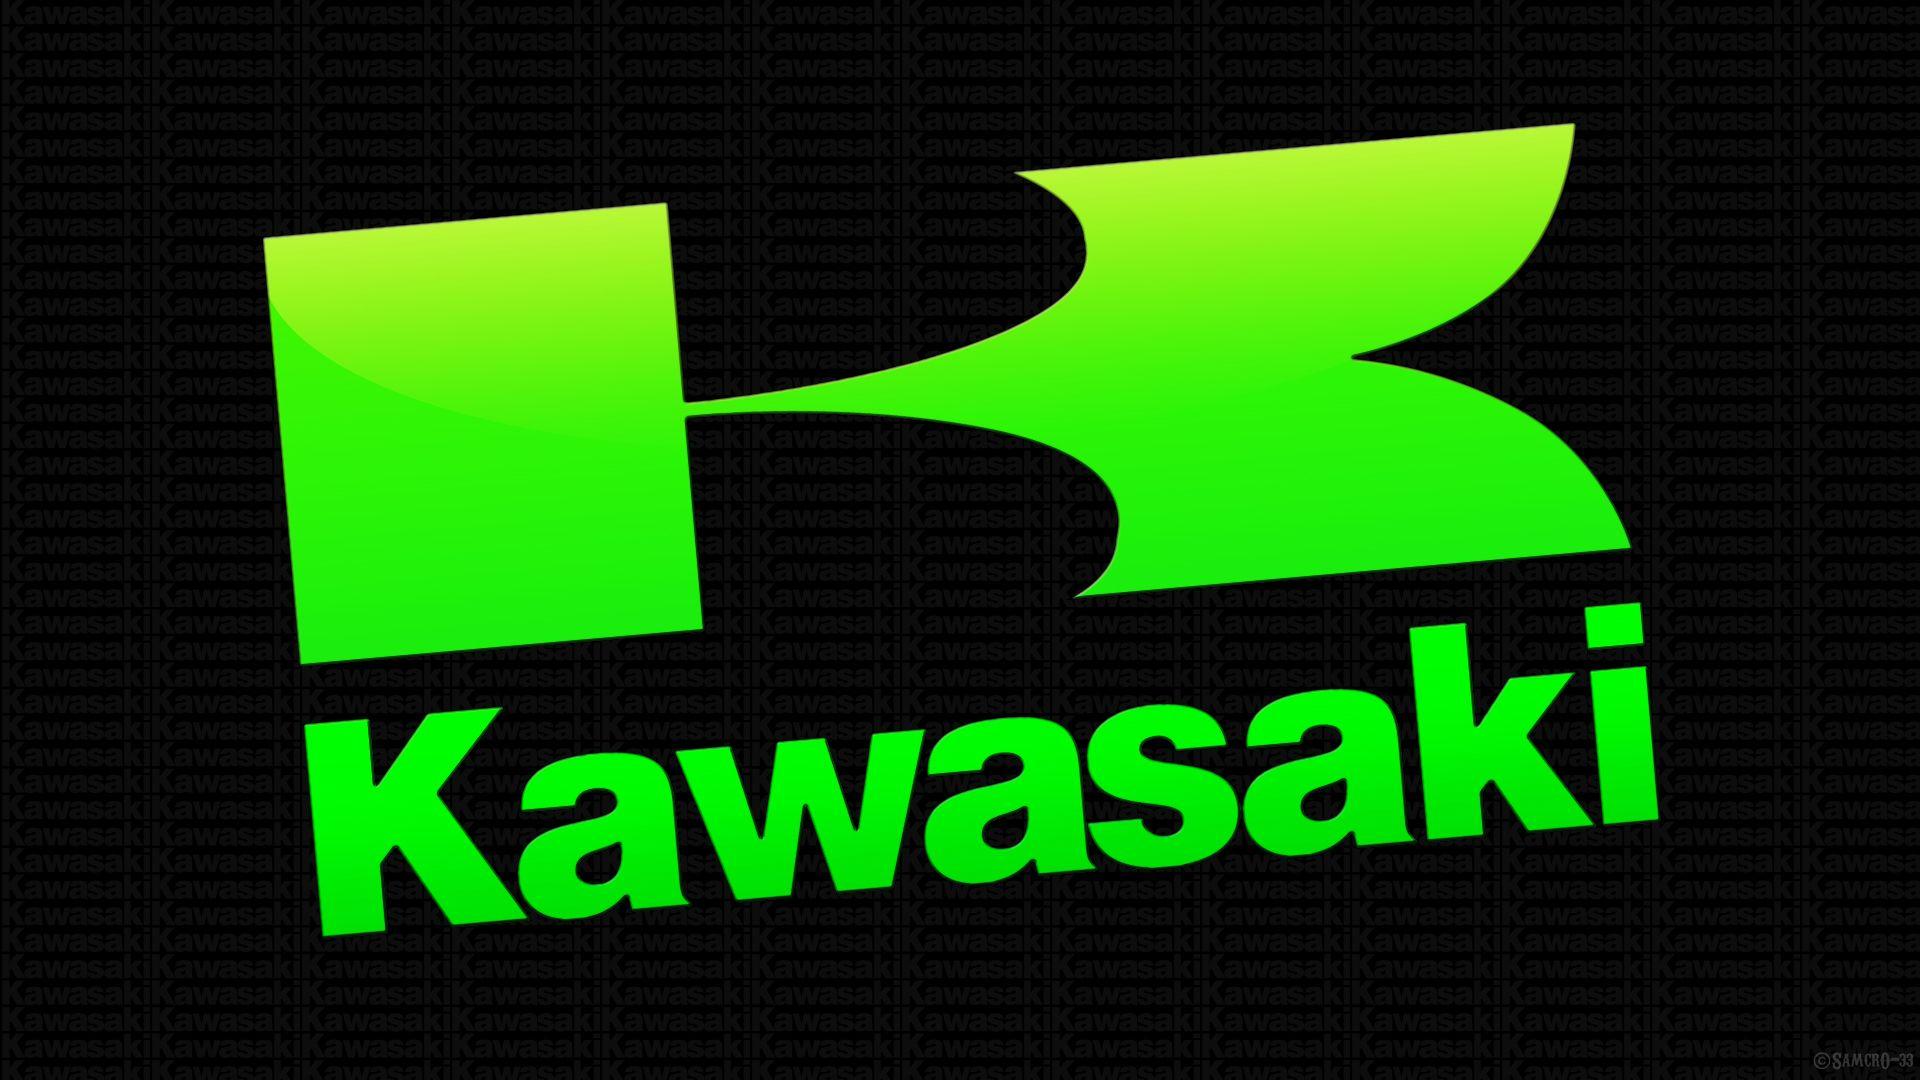 kawasaki logo wallpaper